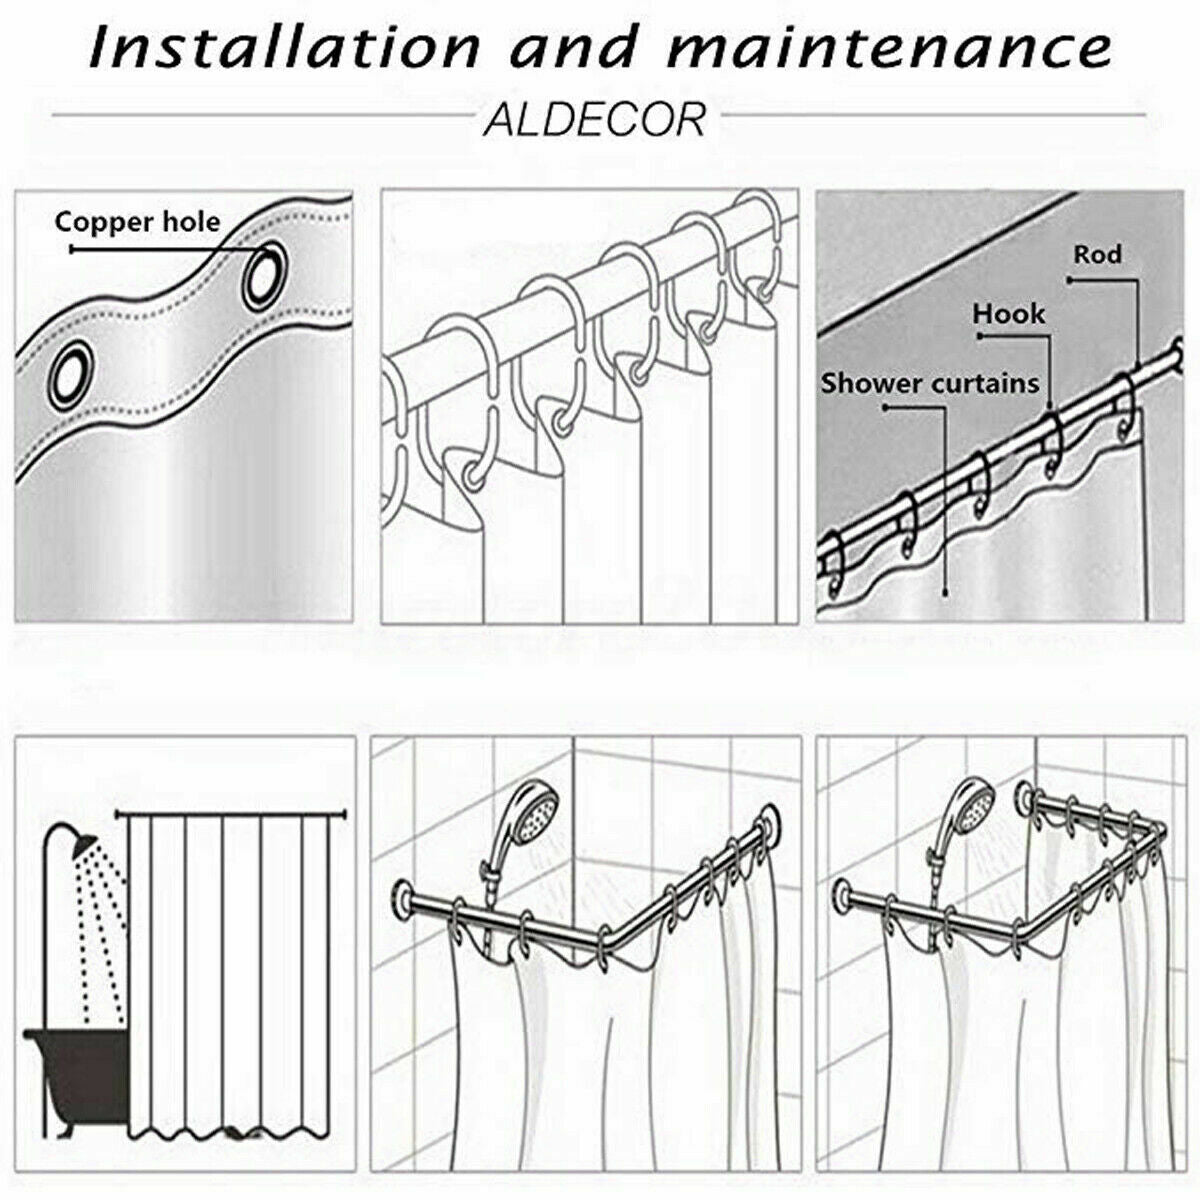 Pumpkin Light Shower Curtain Bathroom Rug Set Bath Mat Non-Slip Toilet Lid Cover-Shower Curtain-Free Shipping at meselling99